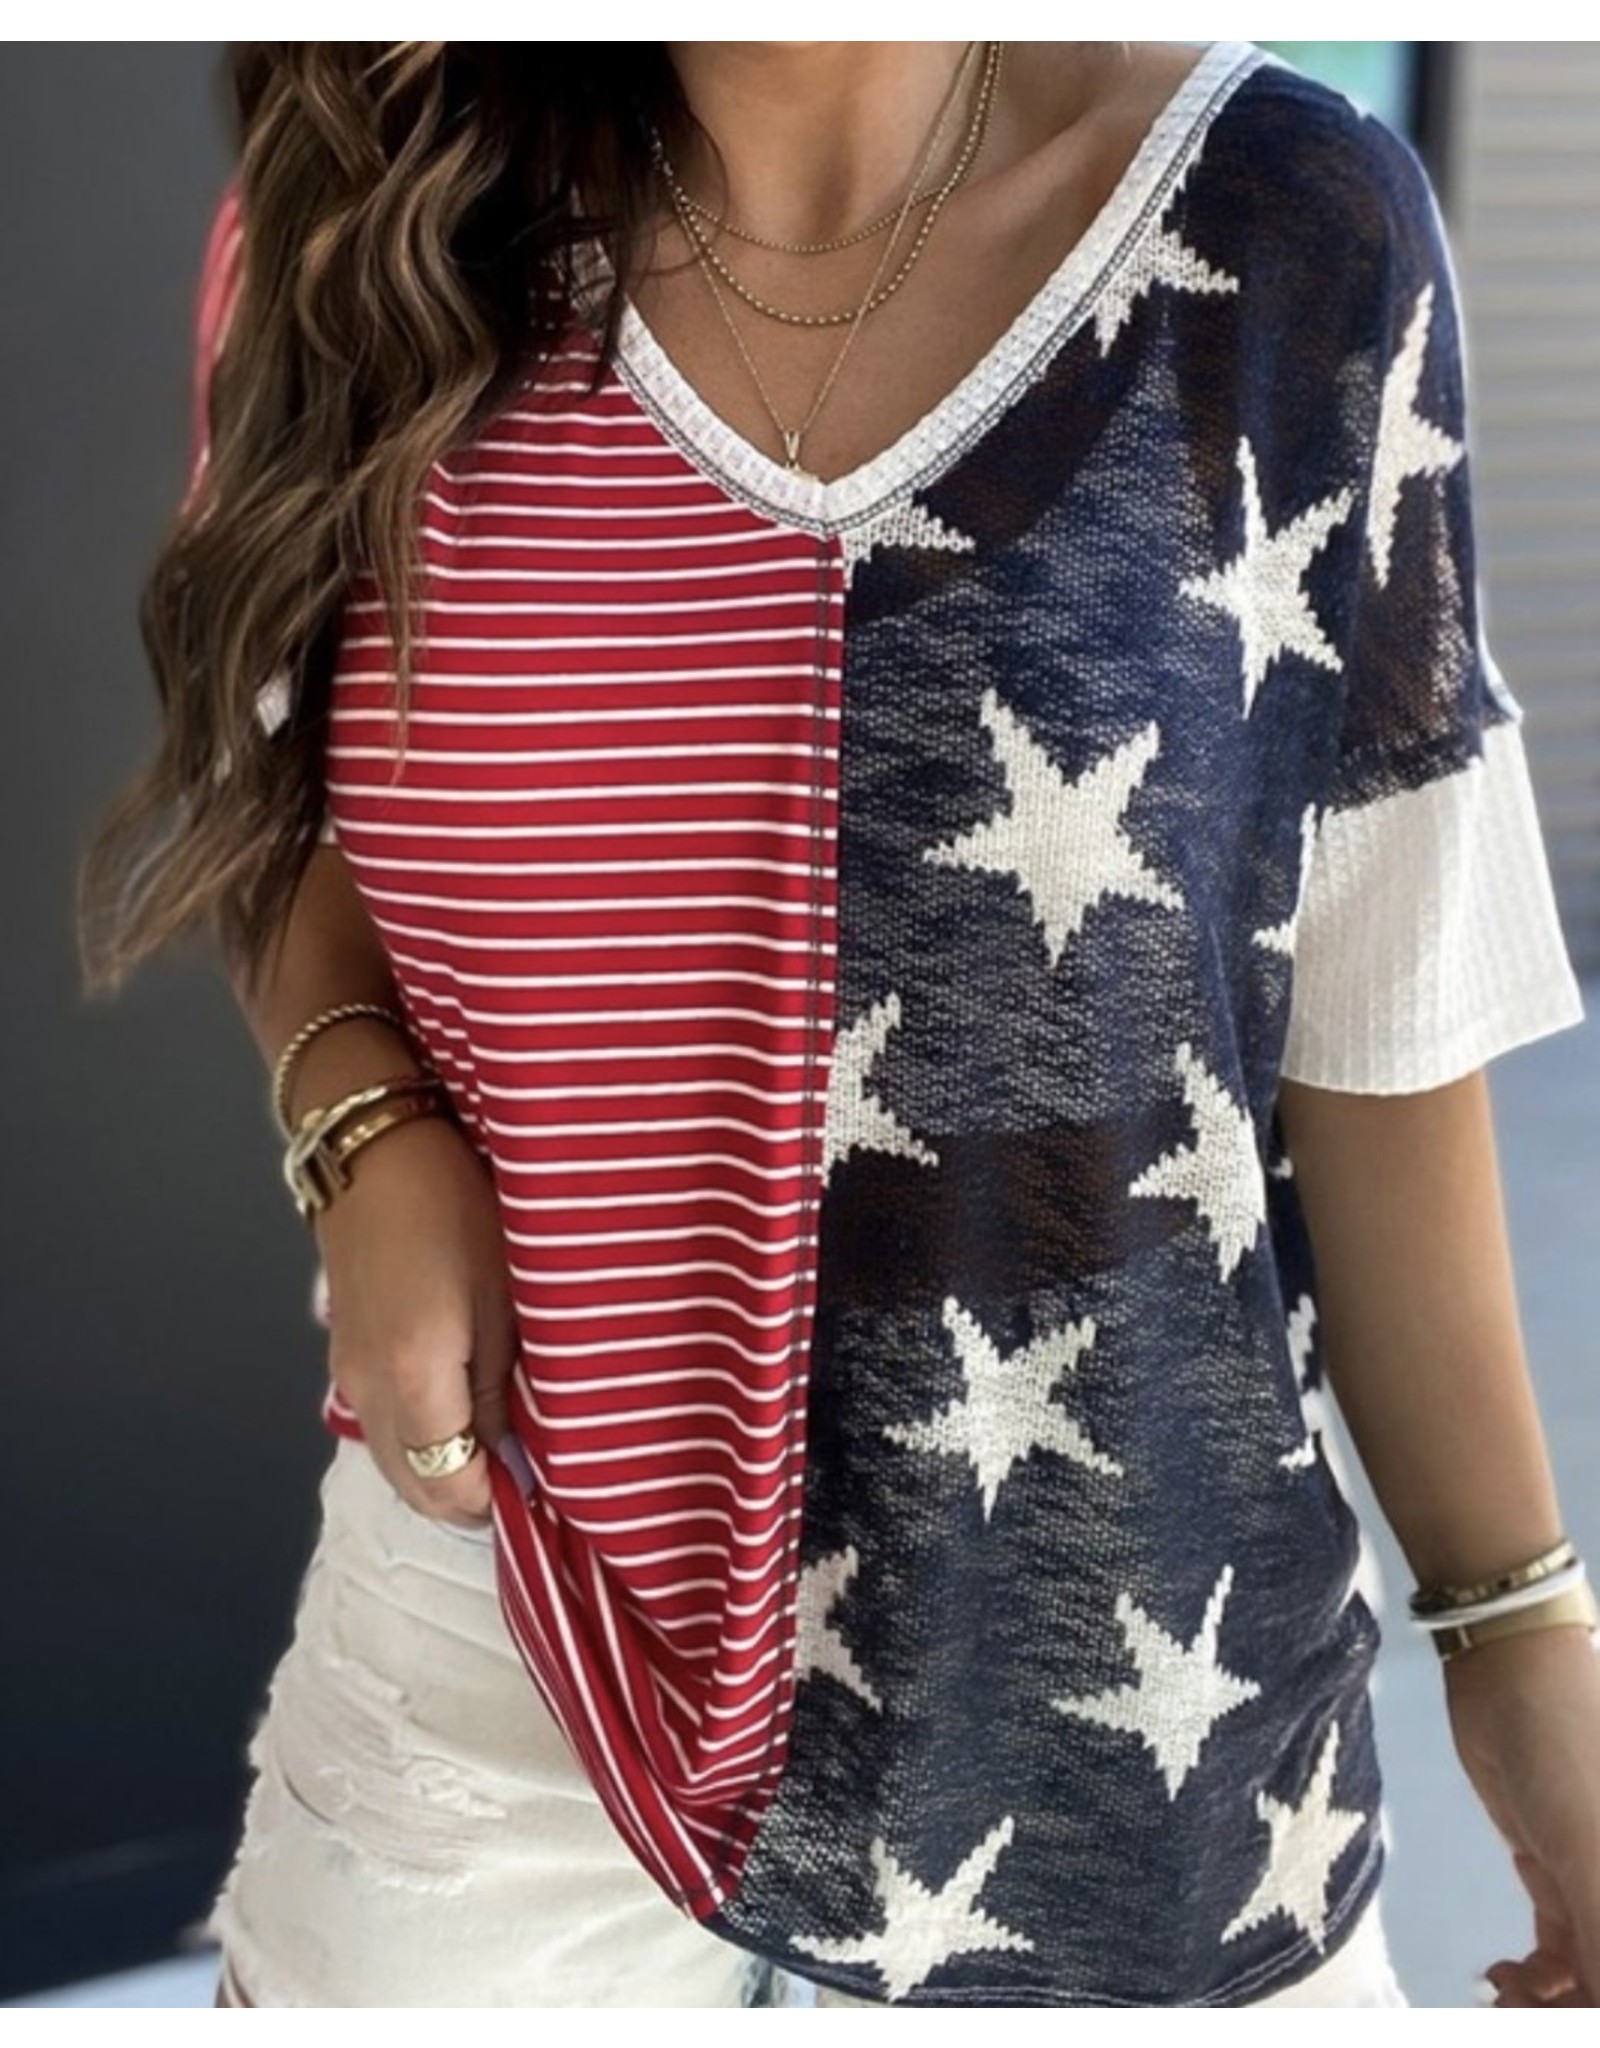 LATA USA stars & stripes knit top